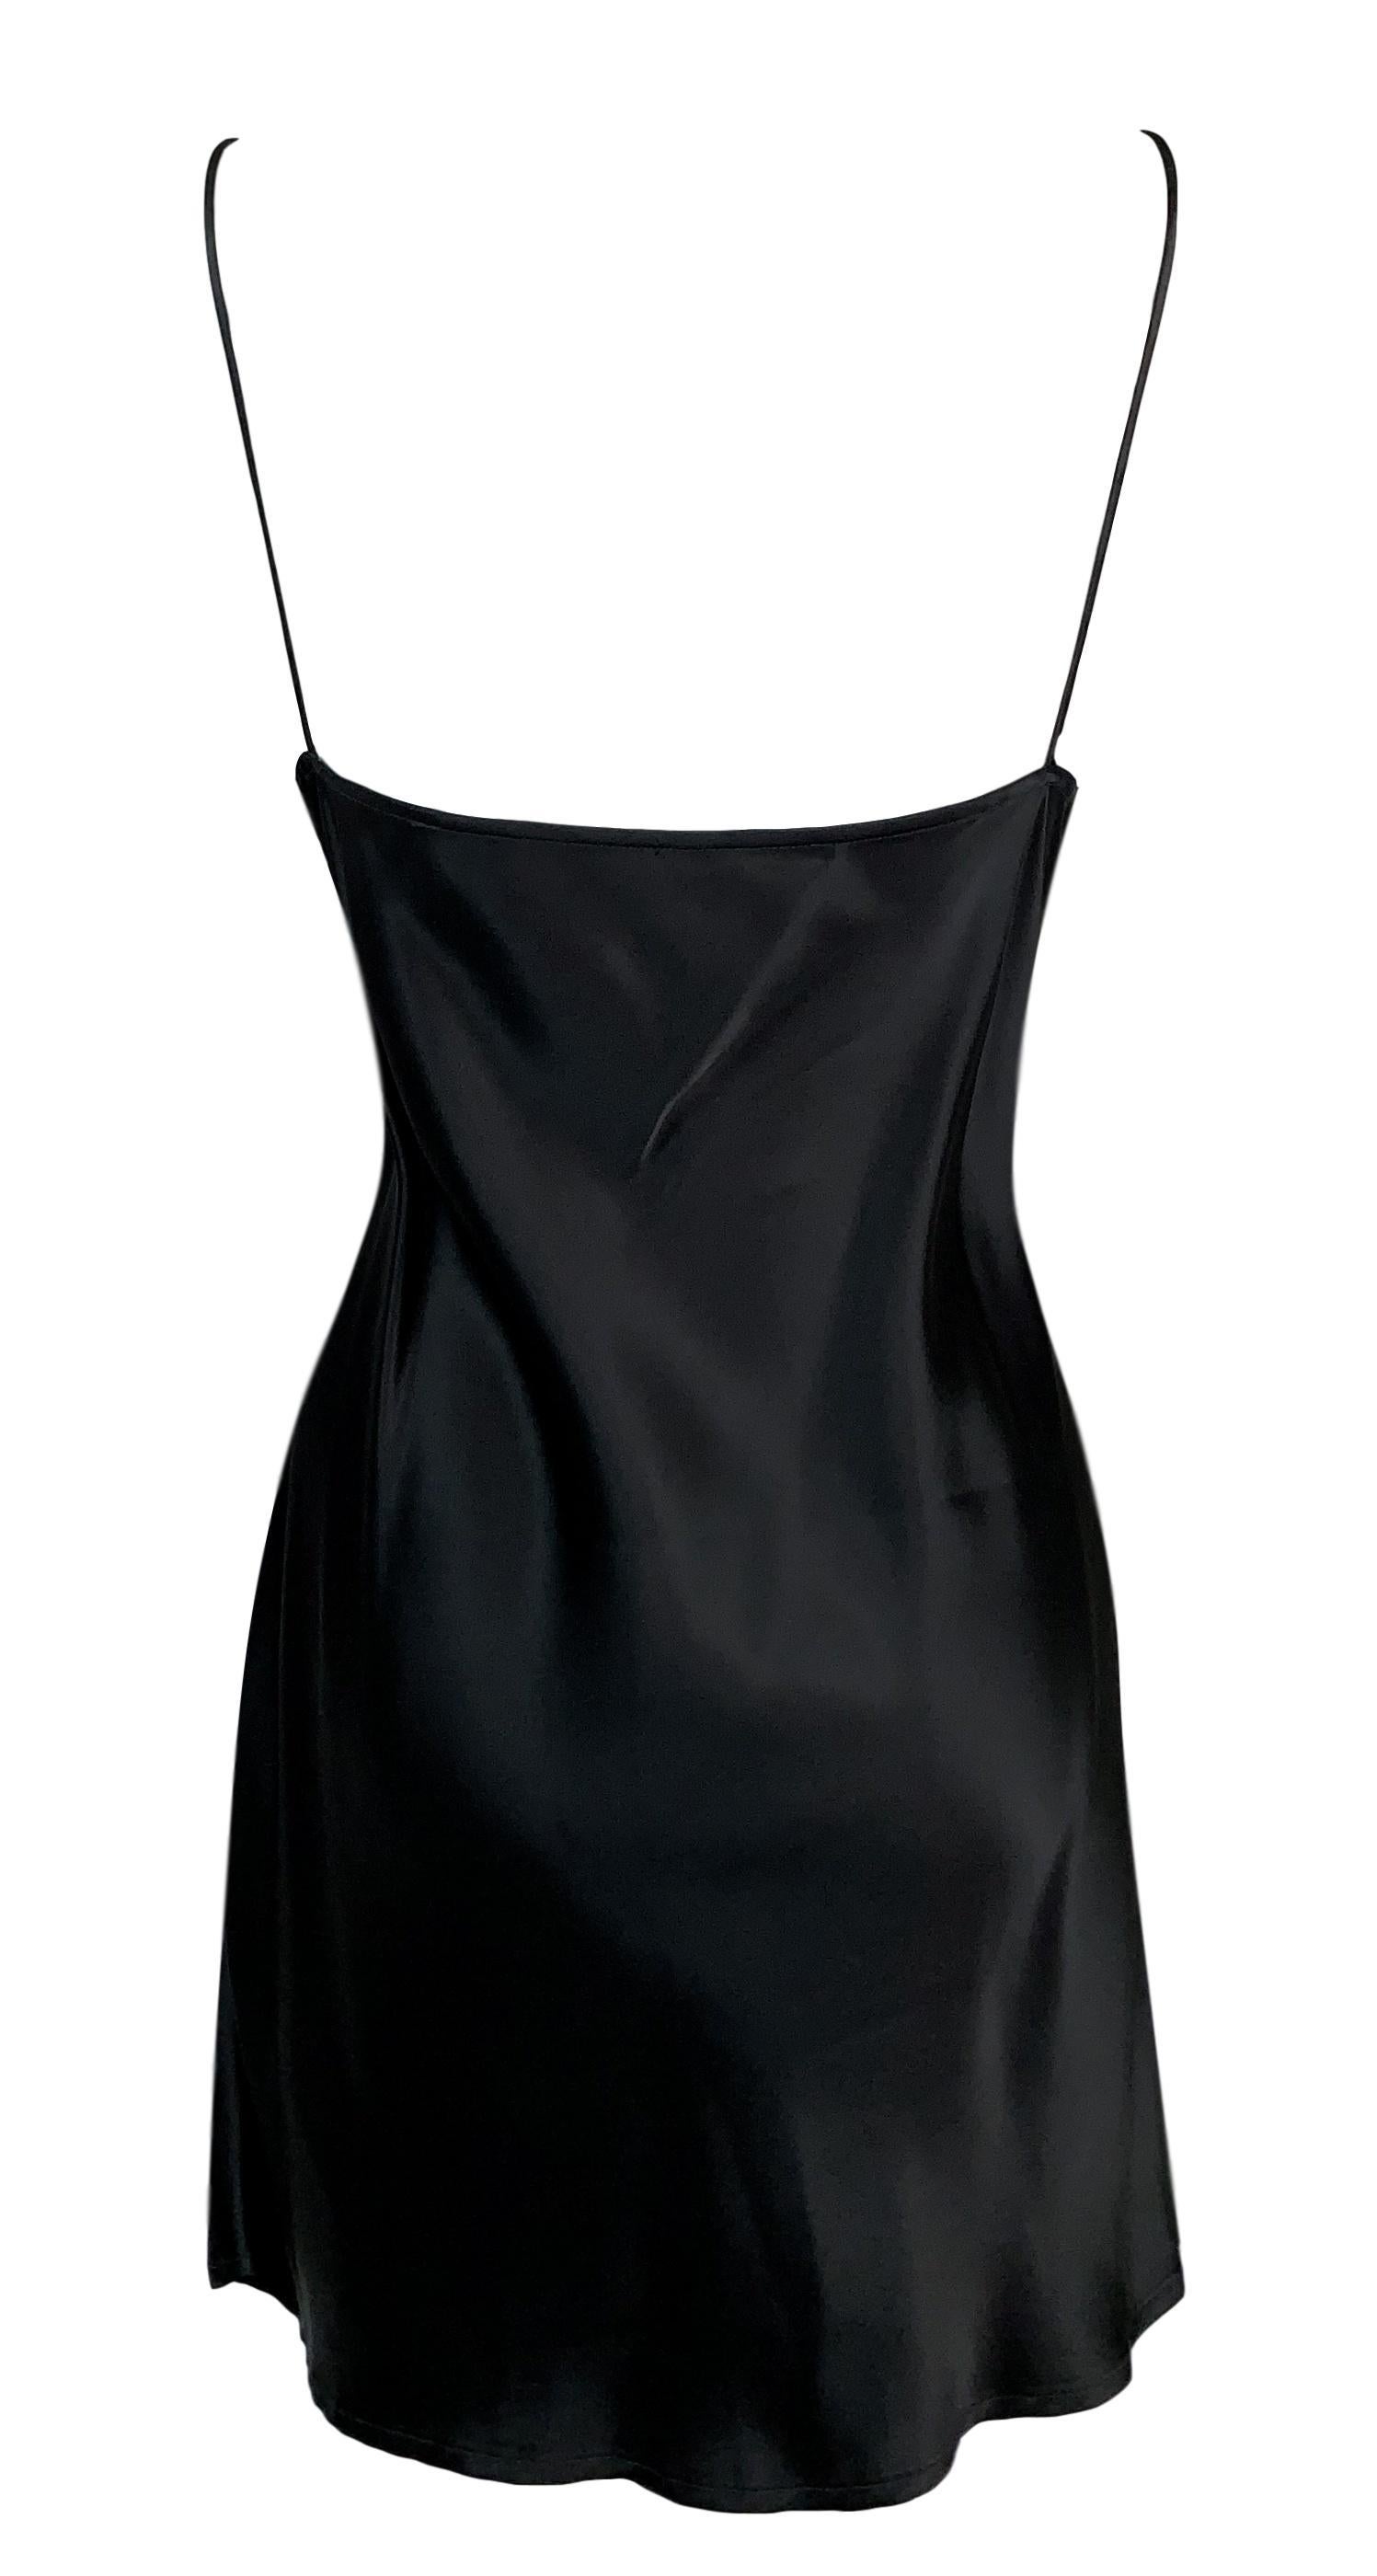 Unworn 1995 Dolce and Gabbana Black Satin Mini Slip Dress at 